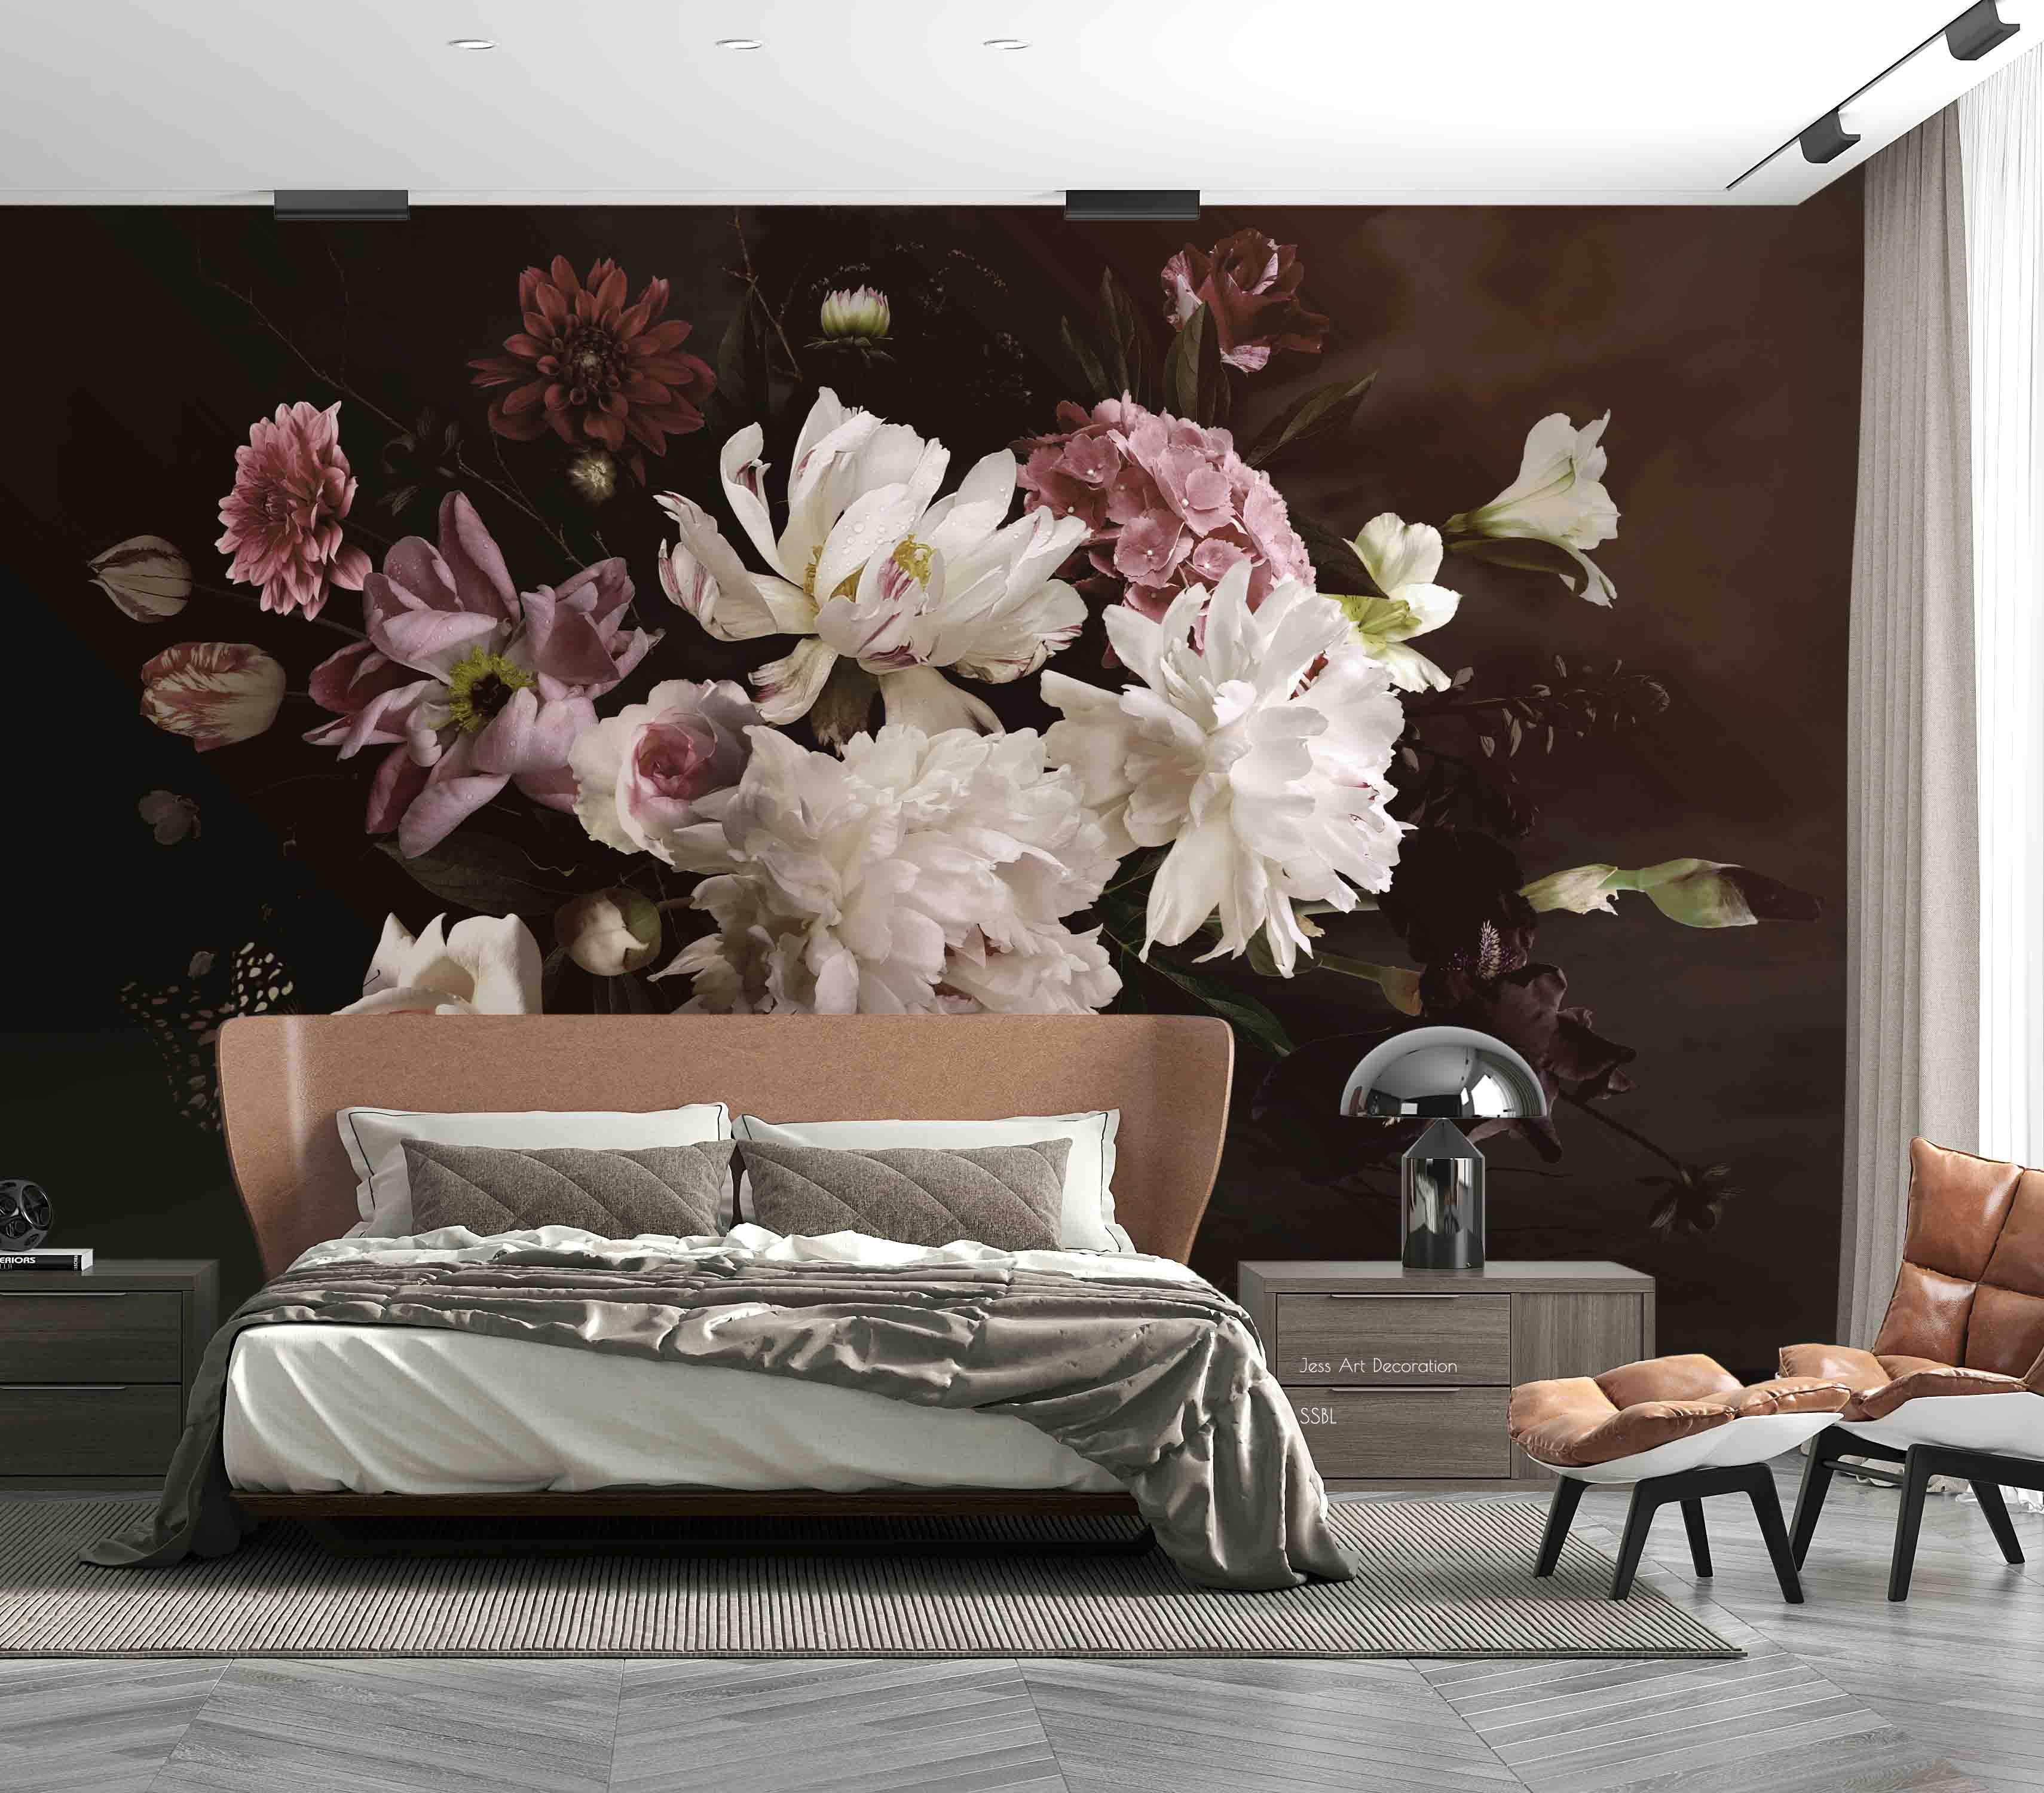 3D Vintage Baroque Art Peony Flowers Black Background Wall Mural Wallpaper GD 3587- Jess Art Decoration